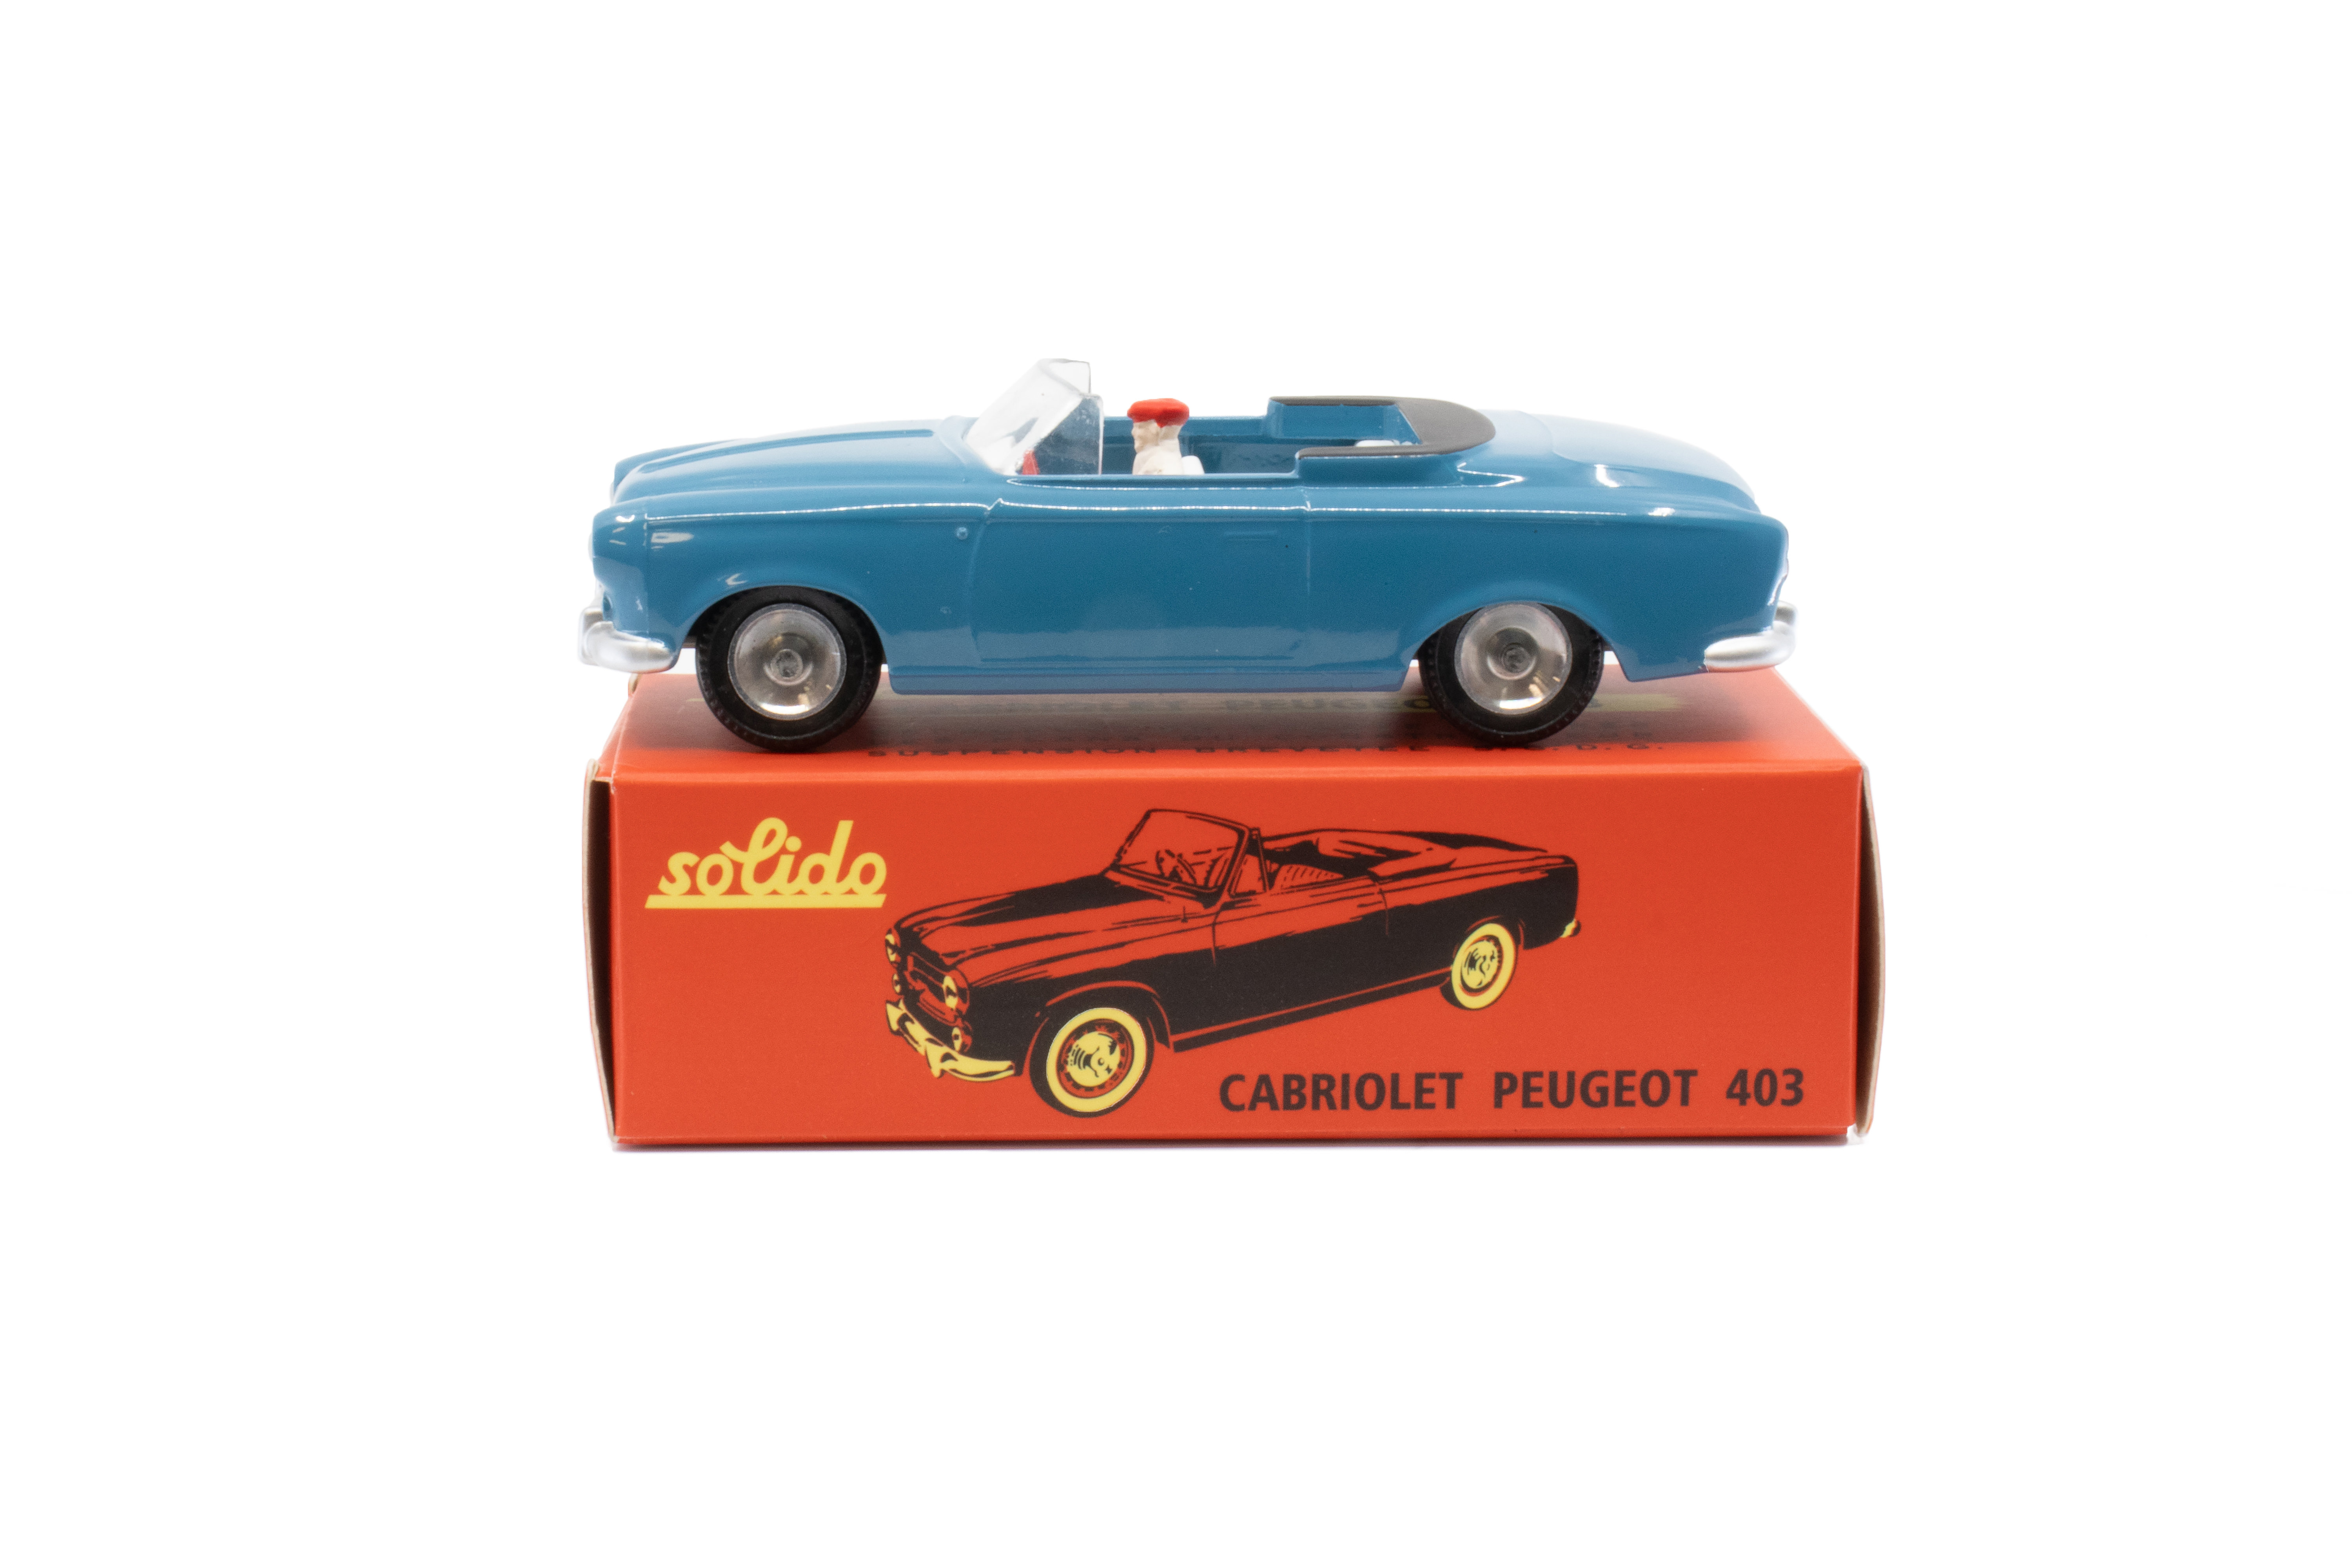 Solido 1:43 Peugeot 403 Cabriolet 1959 blauw. Serie 100